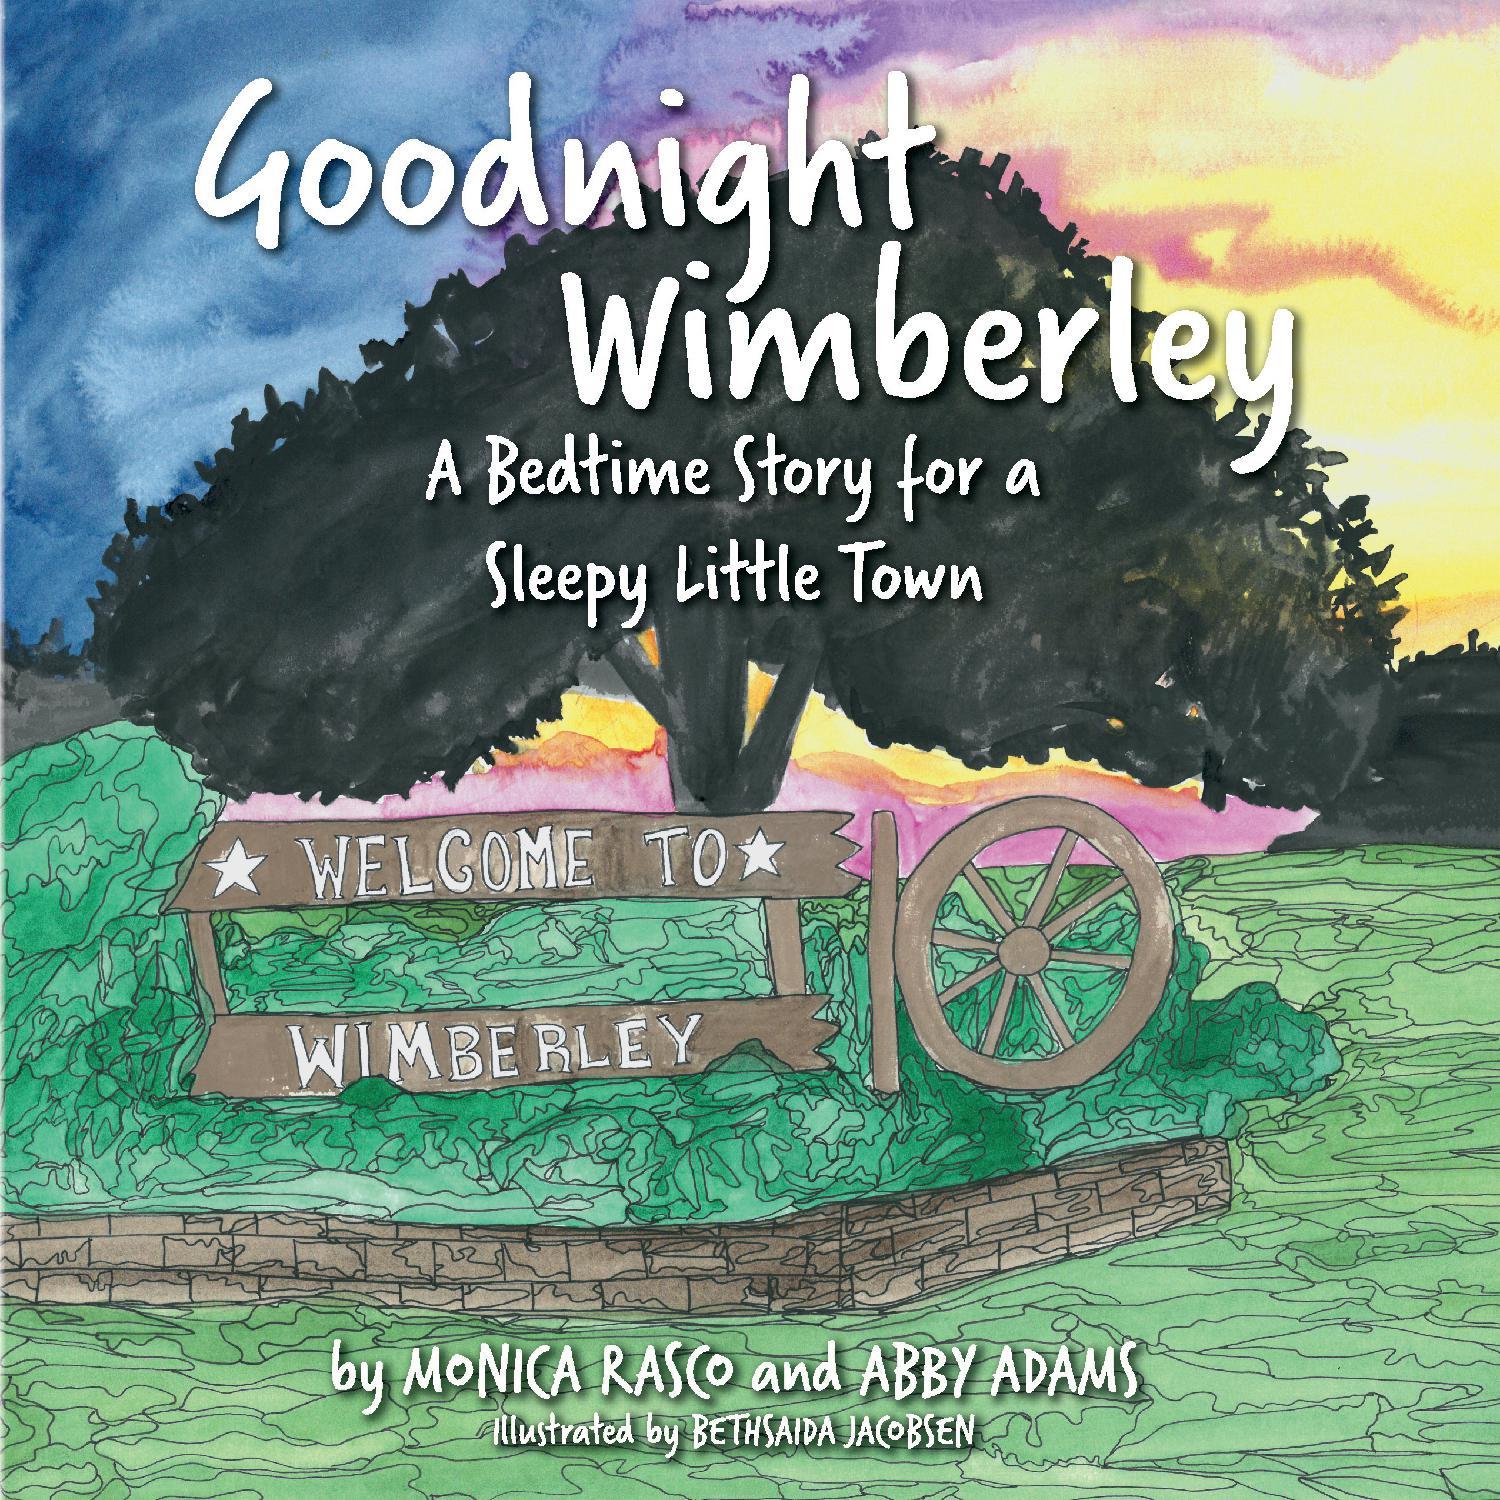 Goodnight Wimberley by Monica Rasco